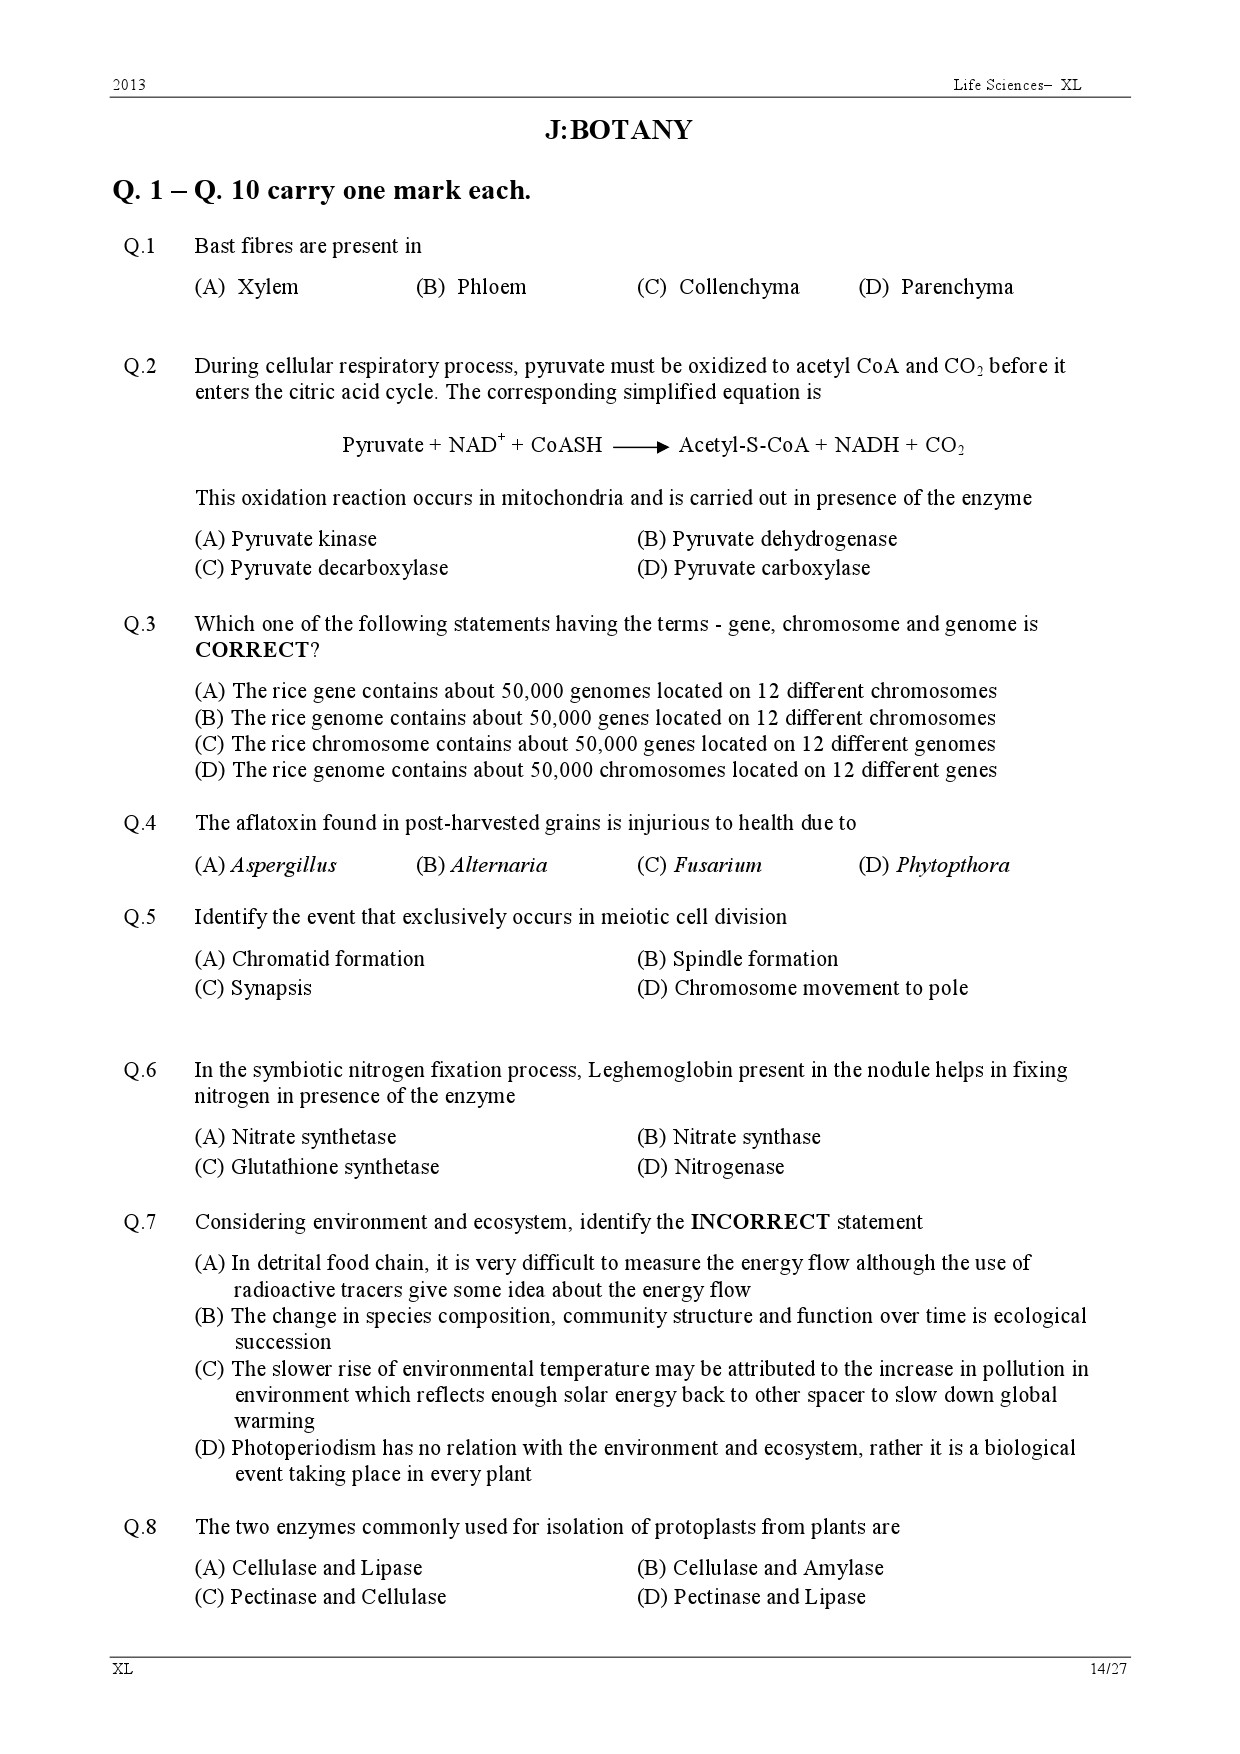 GATE Exam Question Paper 2013 Life Sciences 14